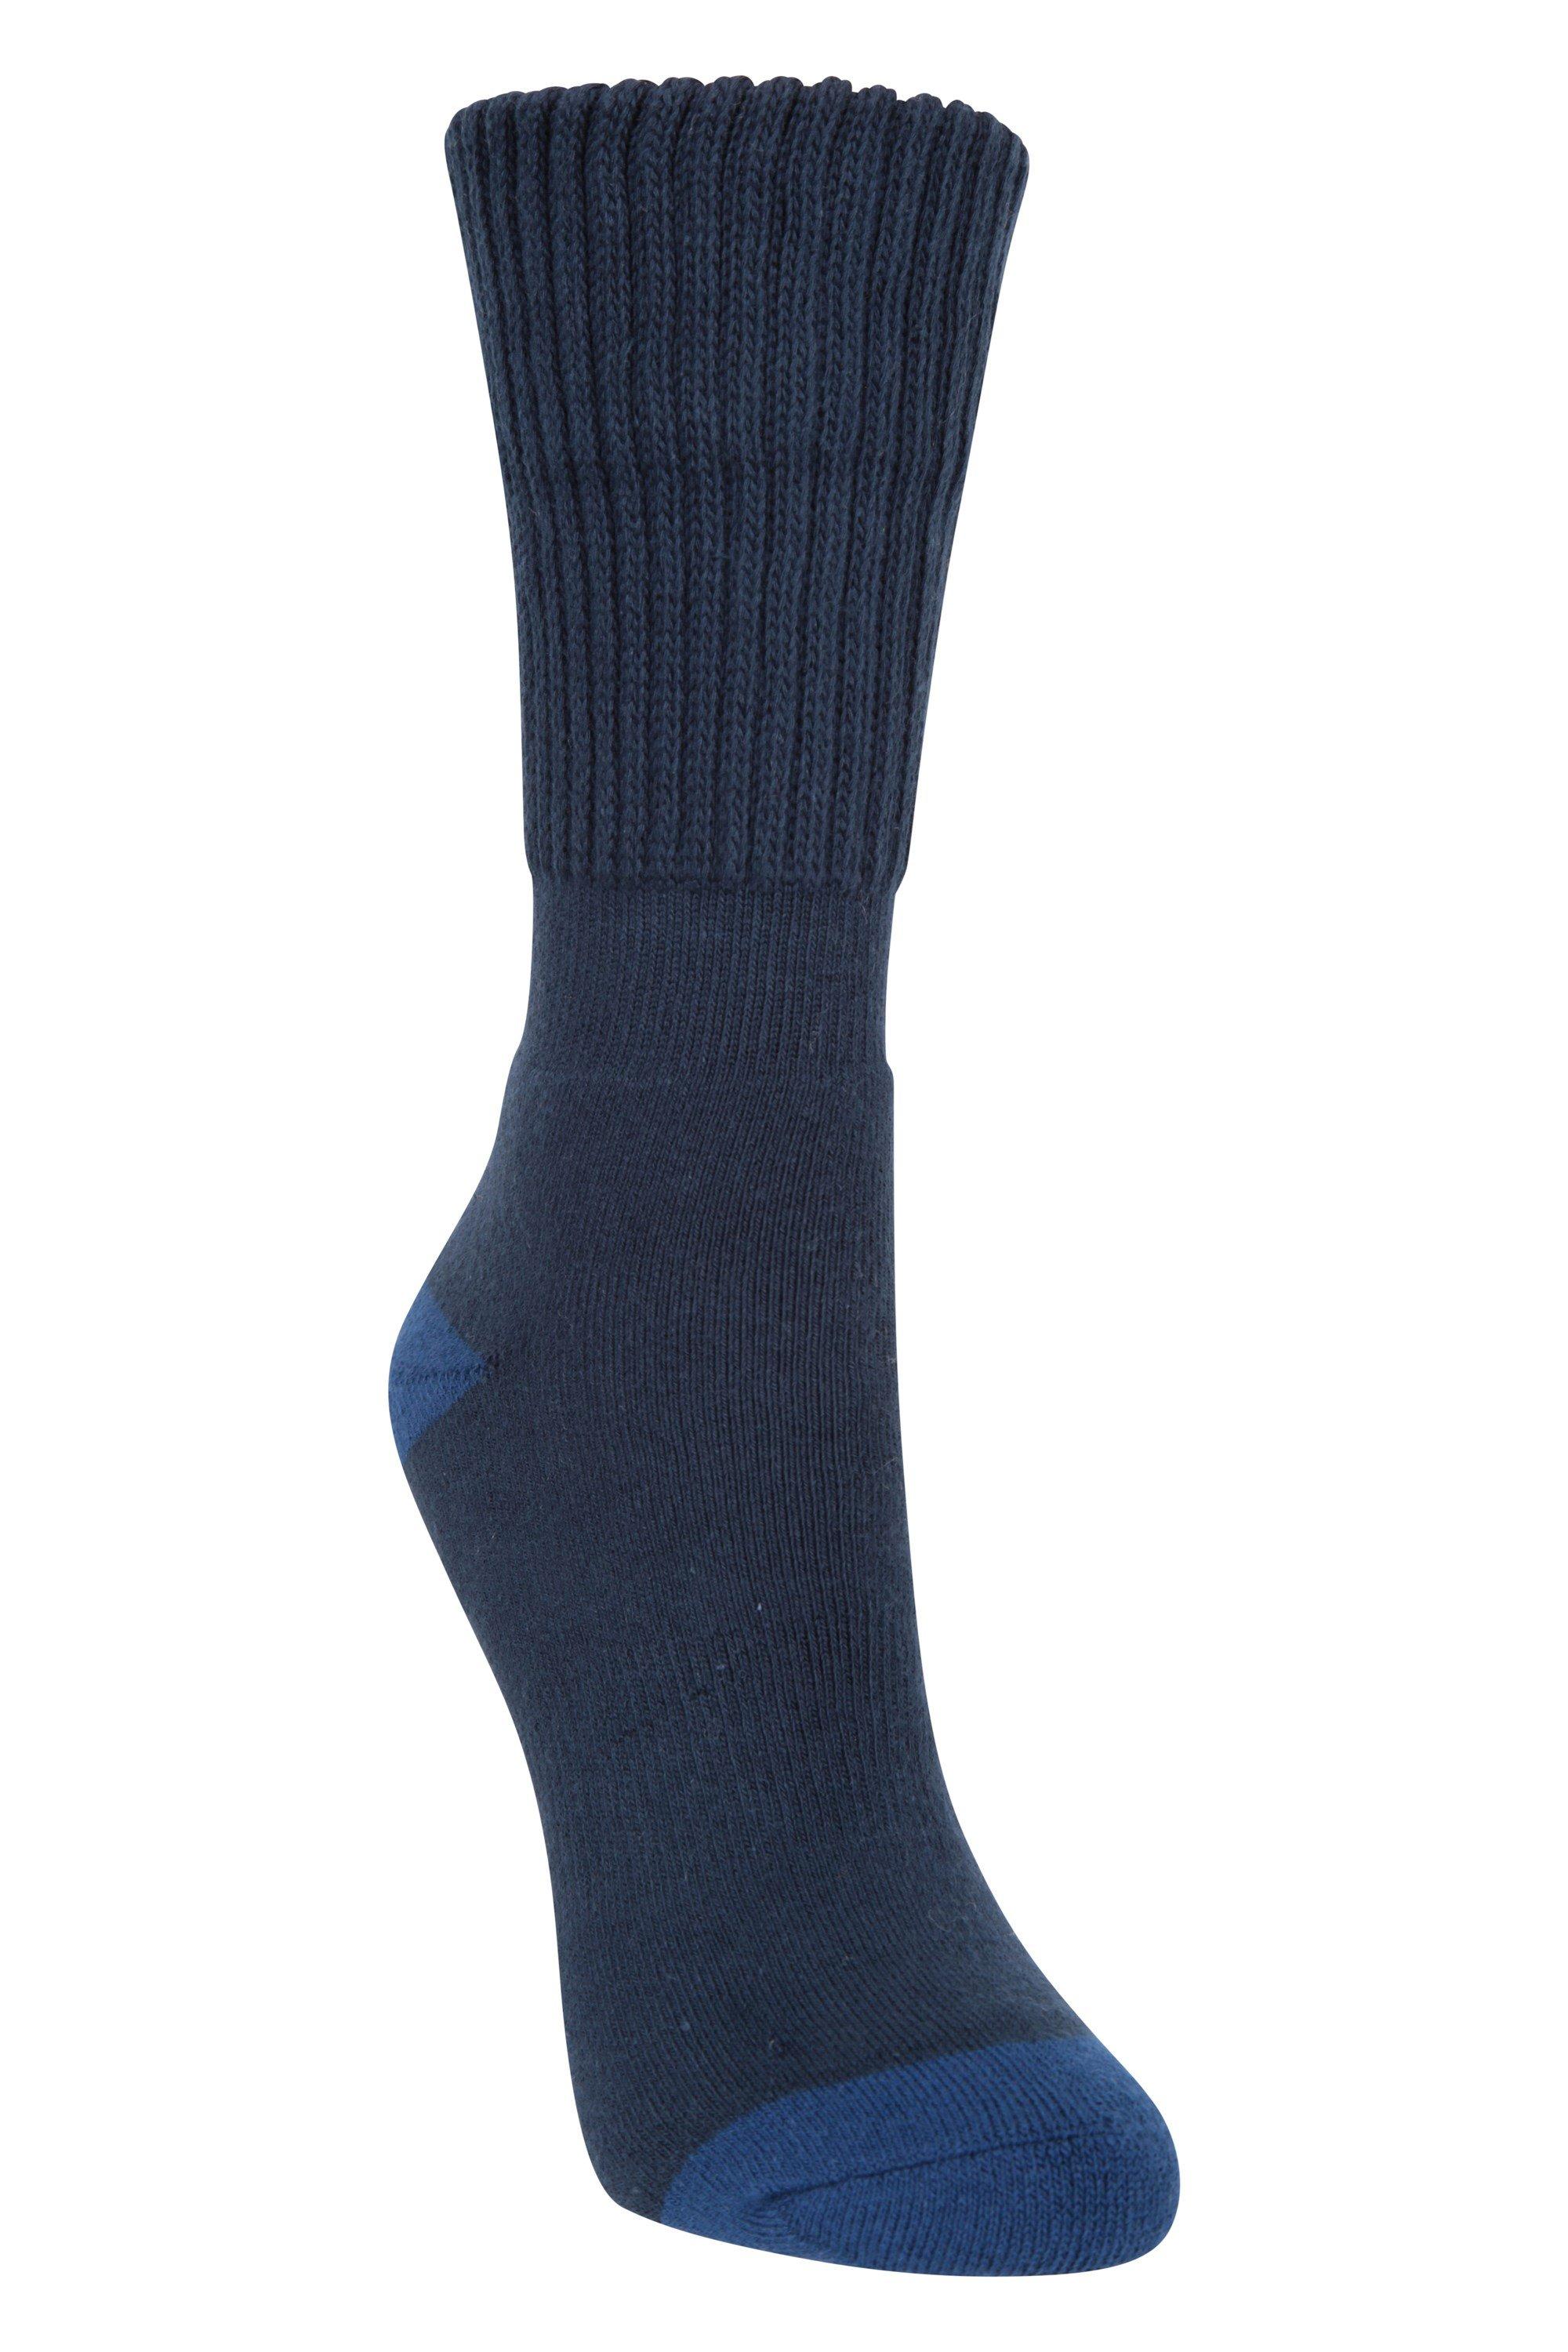 Socks Double Layer  Elastic Cuff Walking Sock